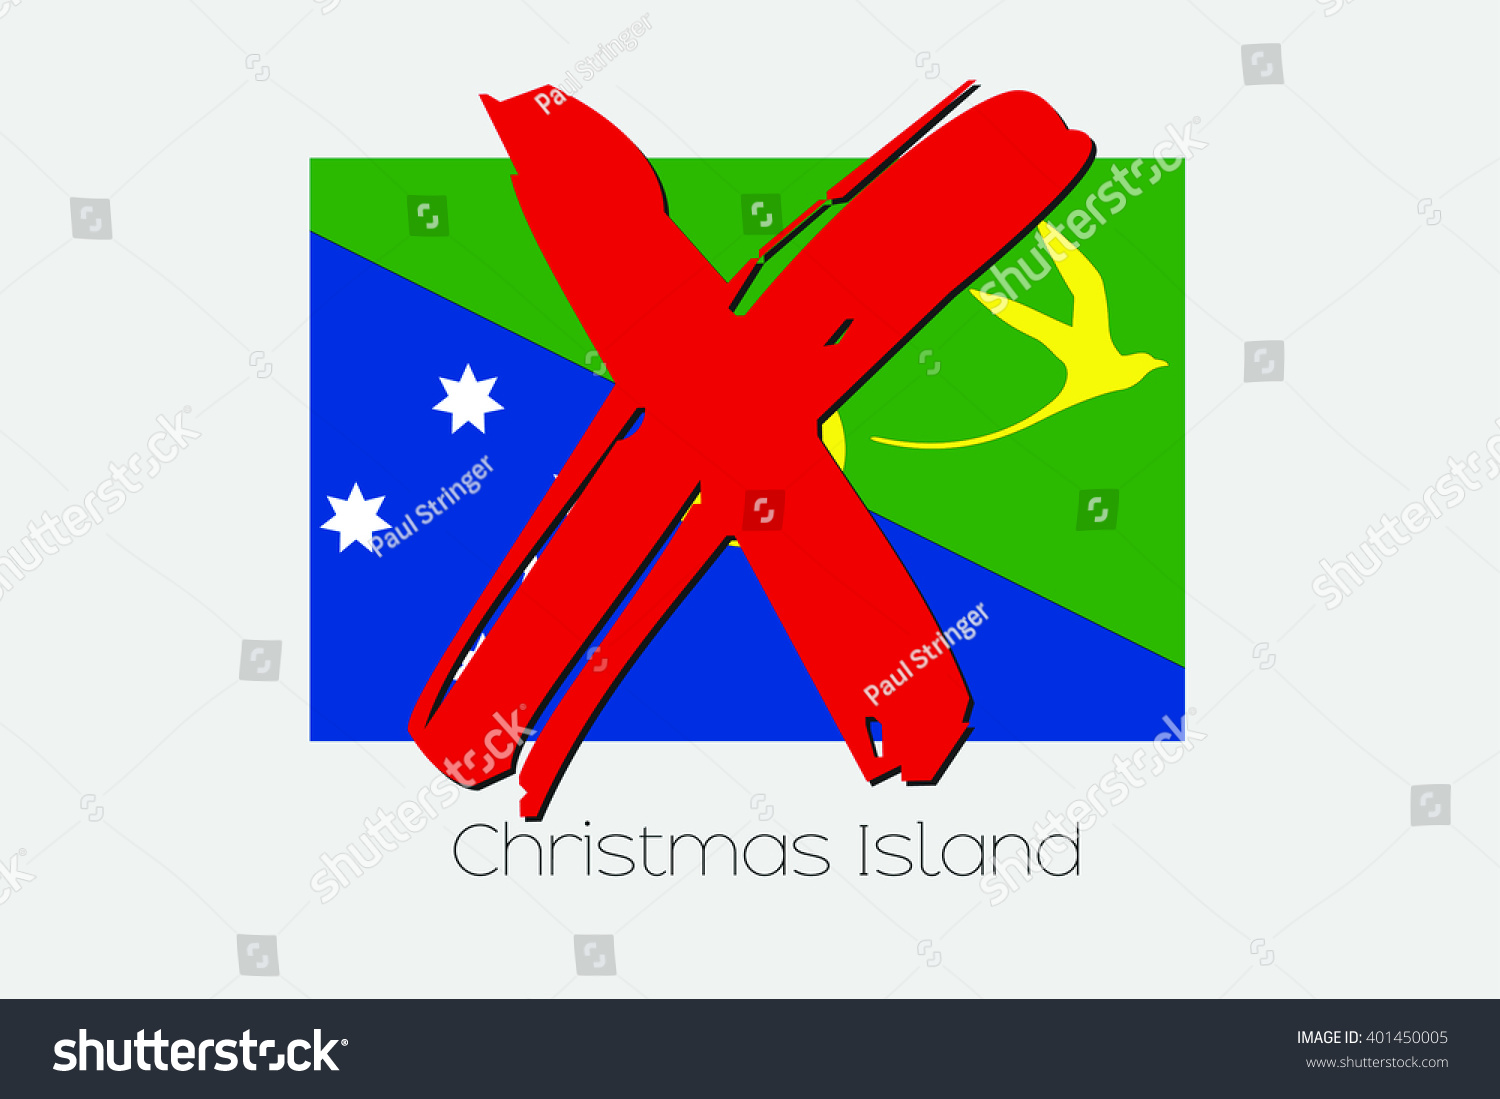 Flag Illustration Cross Through Christmas Island Stock Vector 401450005 - Shutterstock